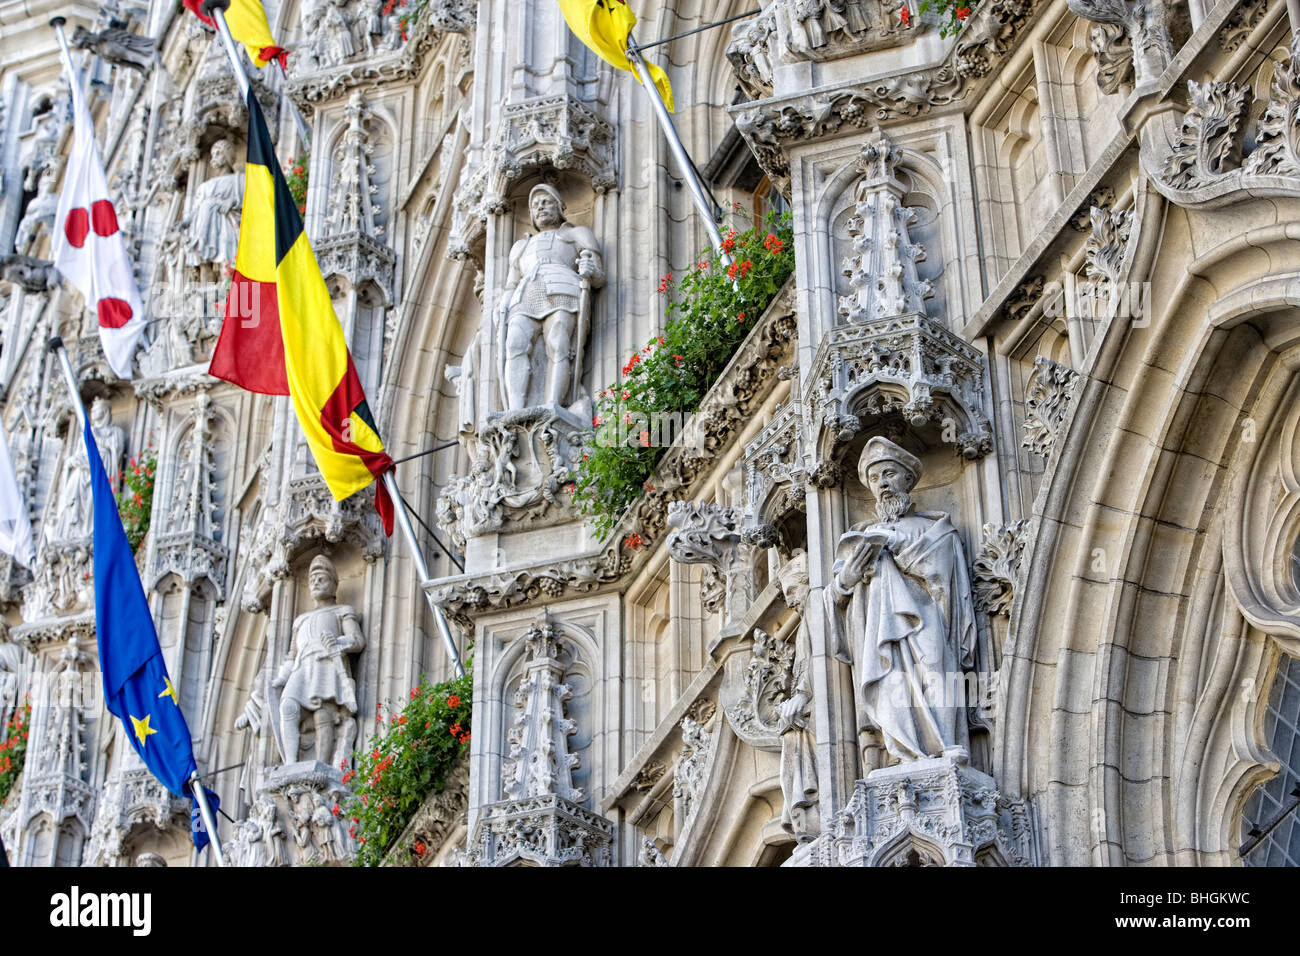 The Gothic Town Hall on the Grote Markt of Leuven, Belgium, Europe Stock Photo